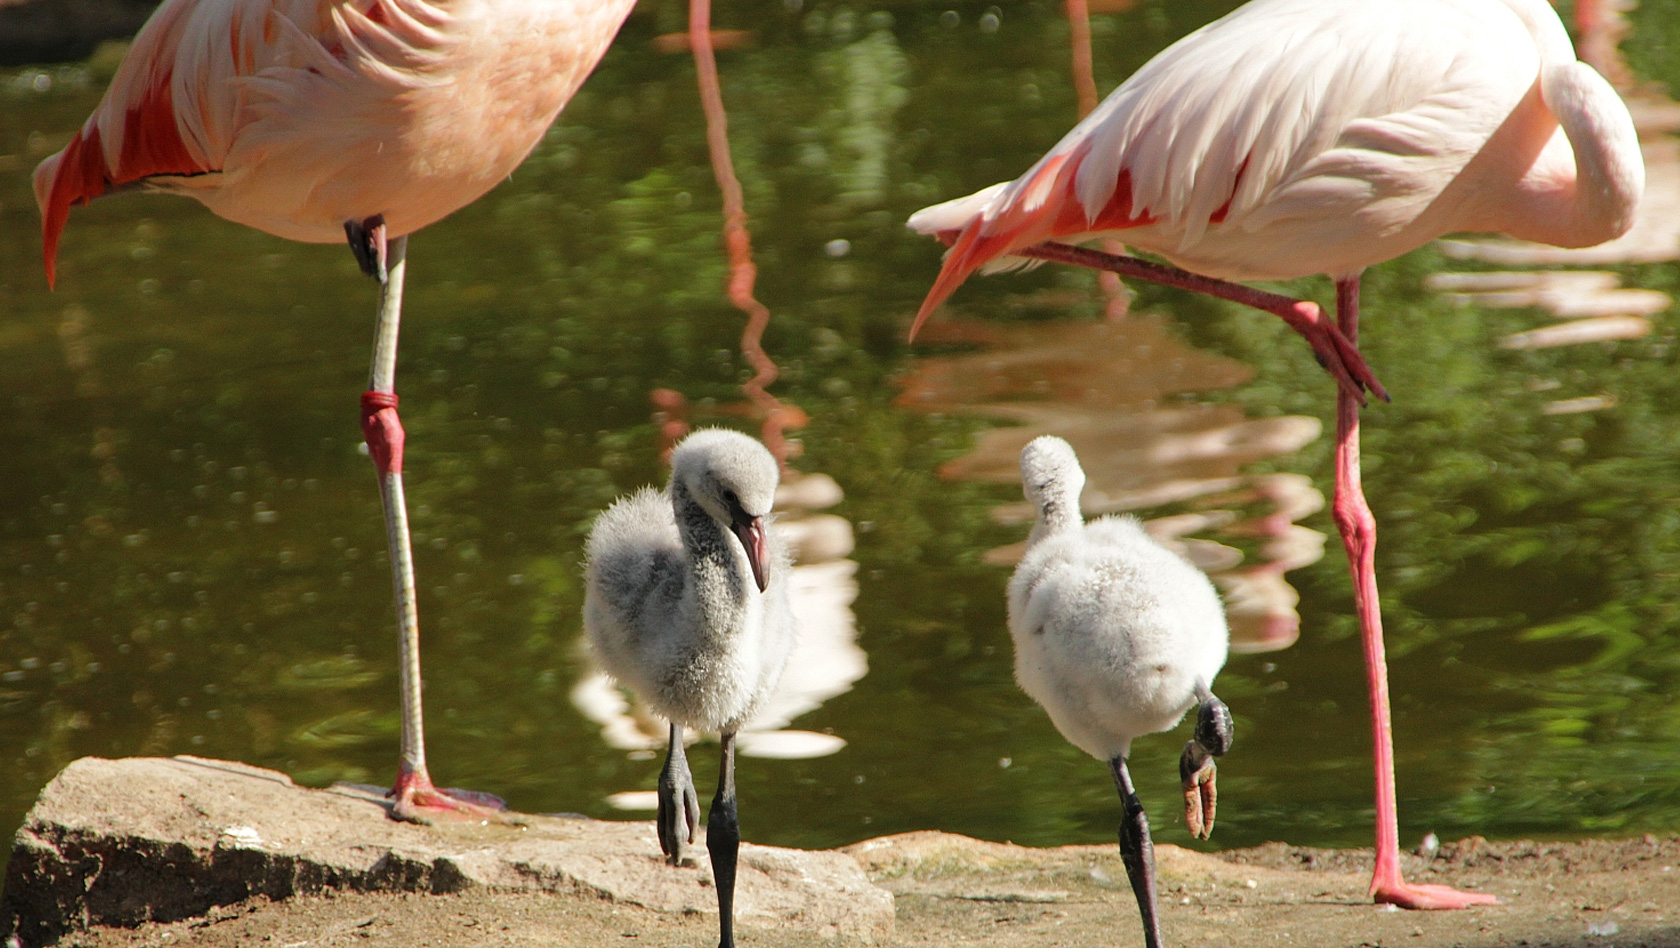 Flamingo-Babys im Erlebnis-Zoo Hannover 2015